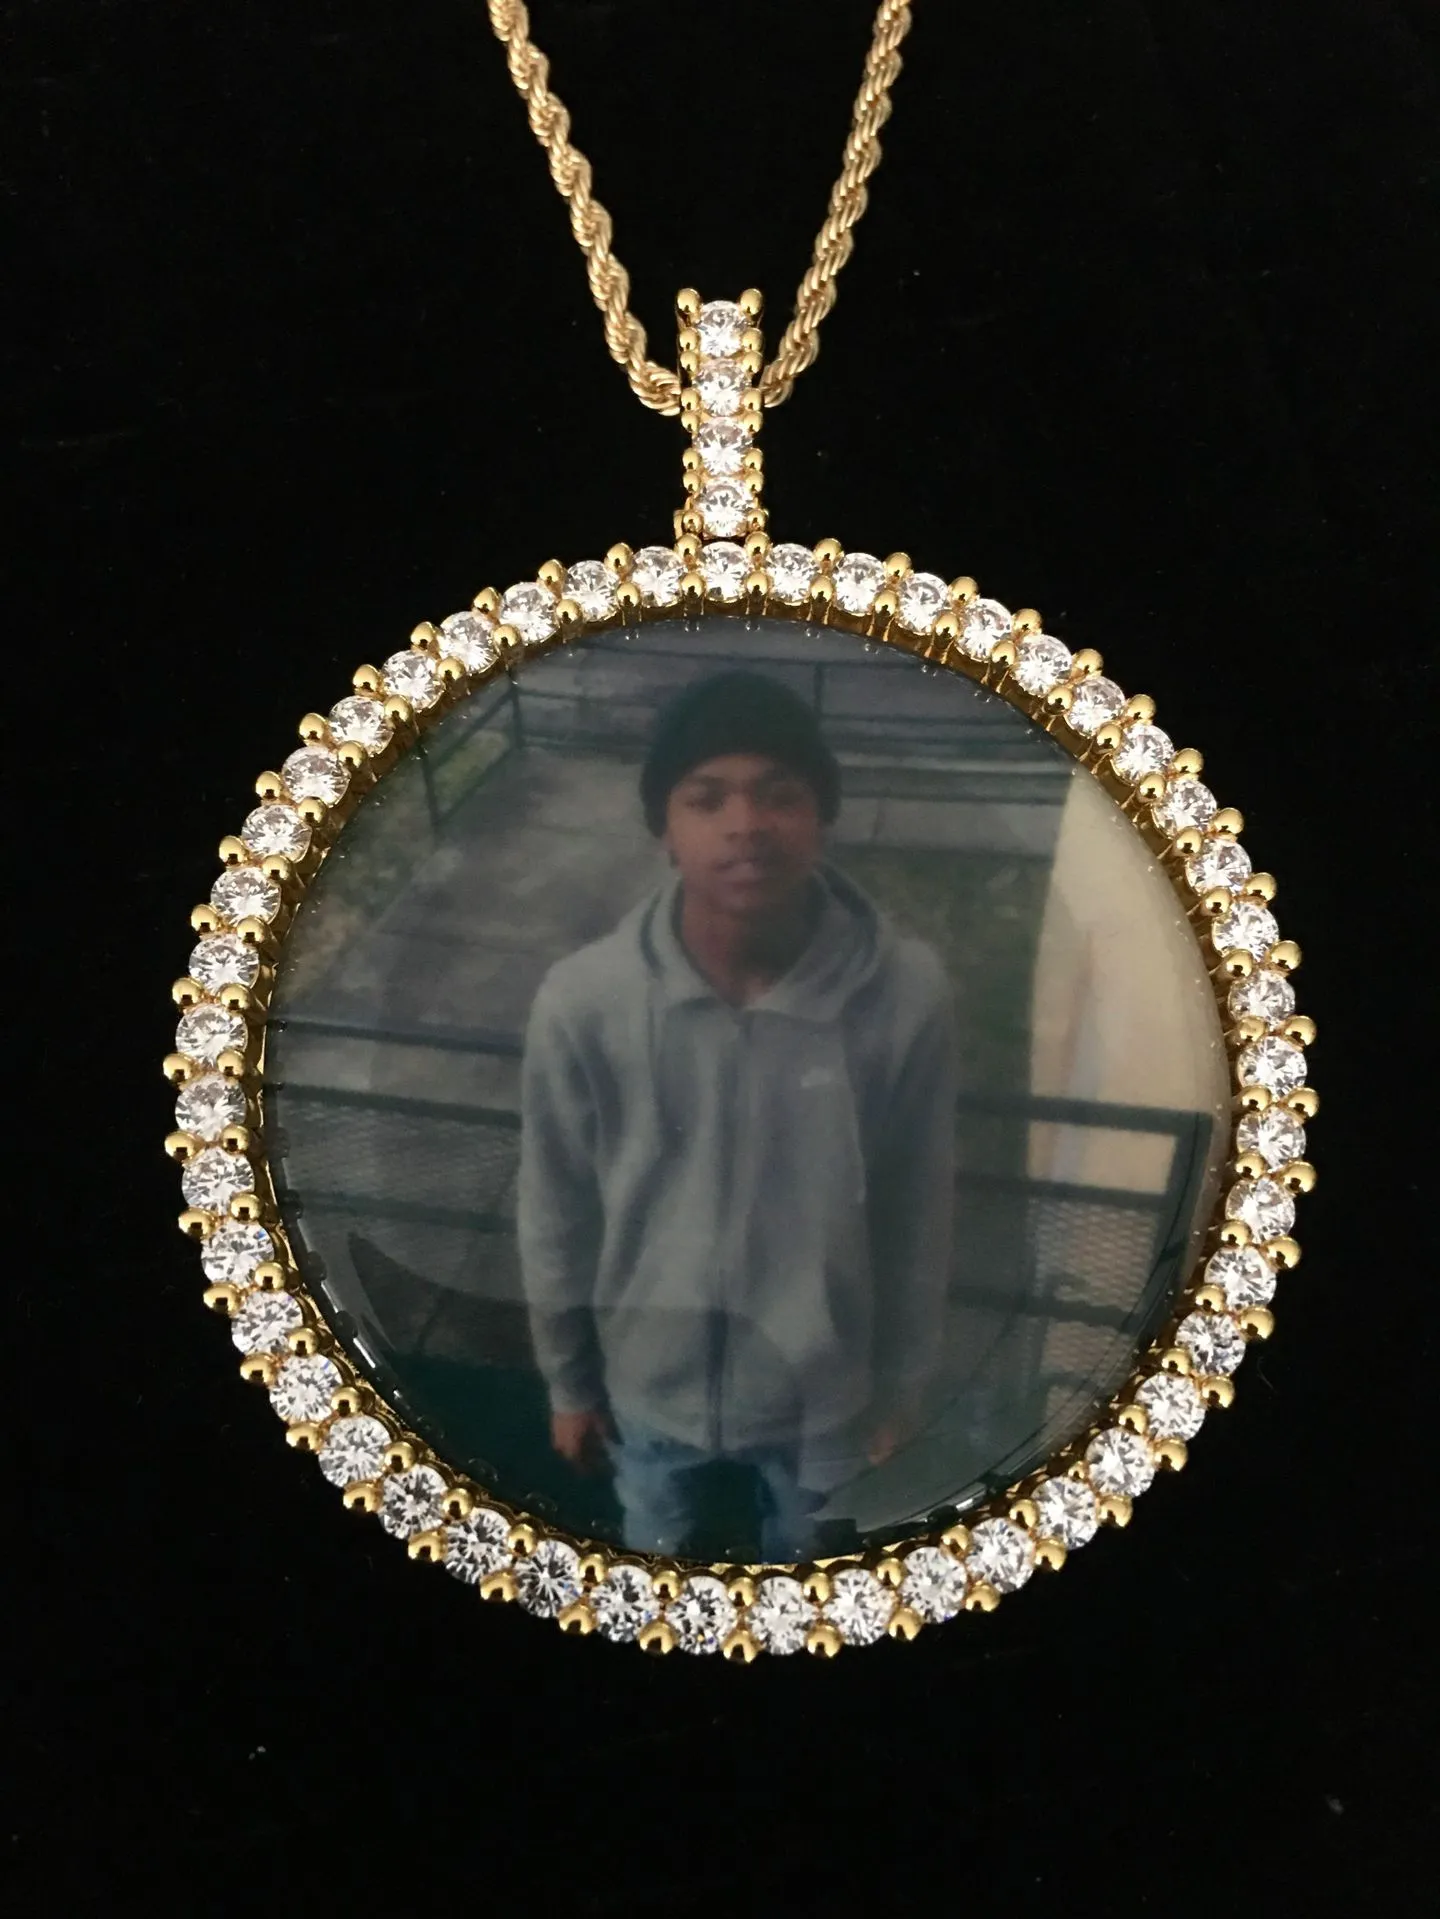 Iced Out Picture Picture Pendant Ronda Classic CRIRCON Diámetro sólido 68.5mm Tamaño de gran tamaño Personalidad Hip Hop Photo Memory Bling Jewelry